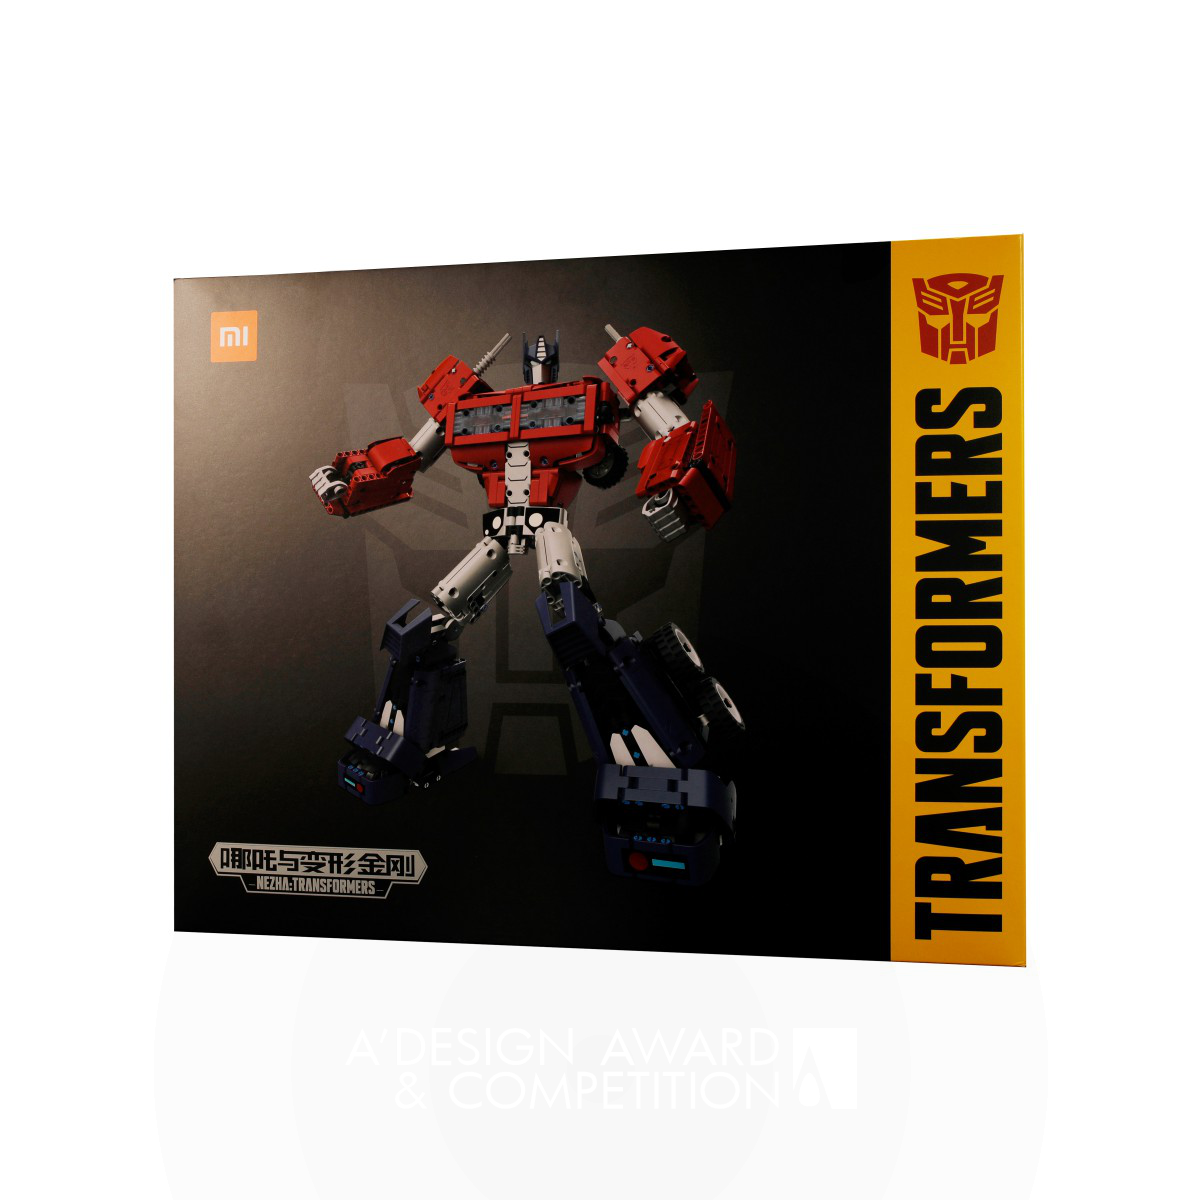 Building Block Toy Packaging for Mi Transformers Optimus Prime